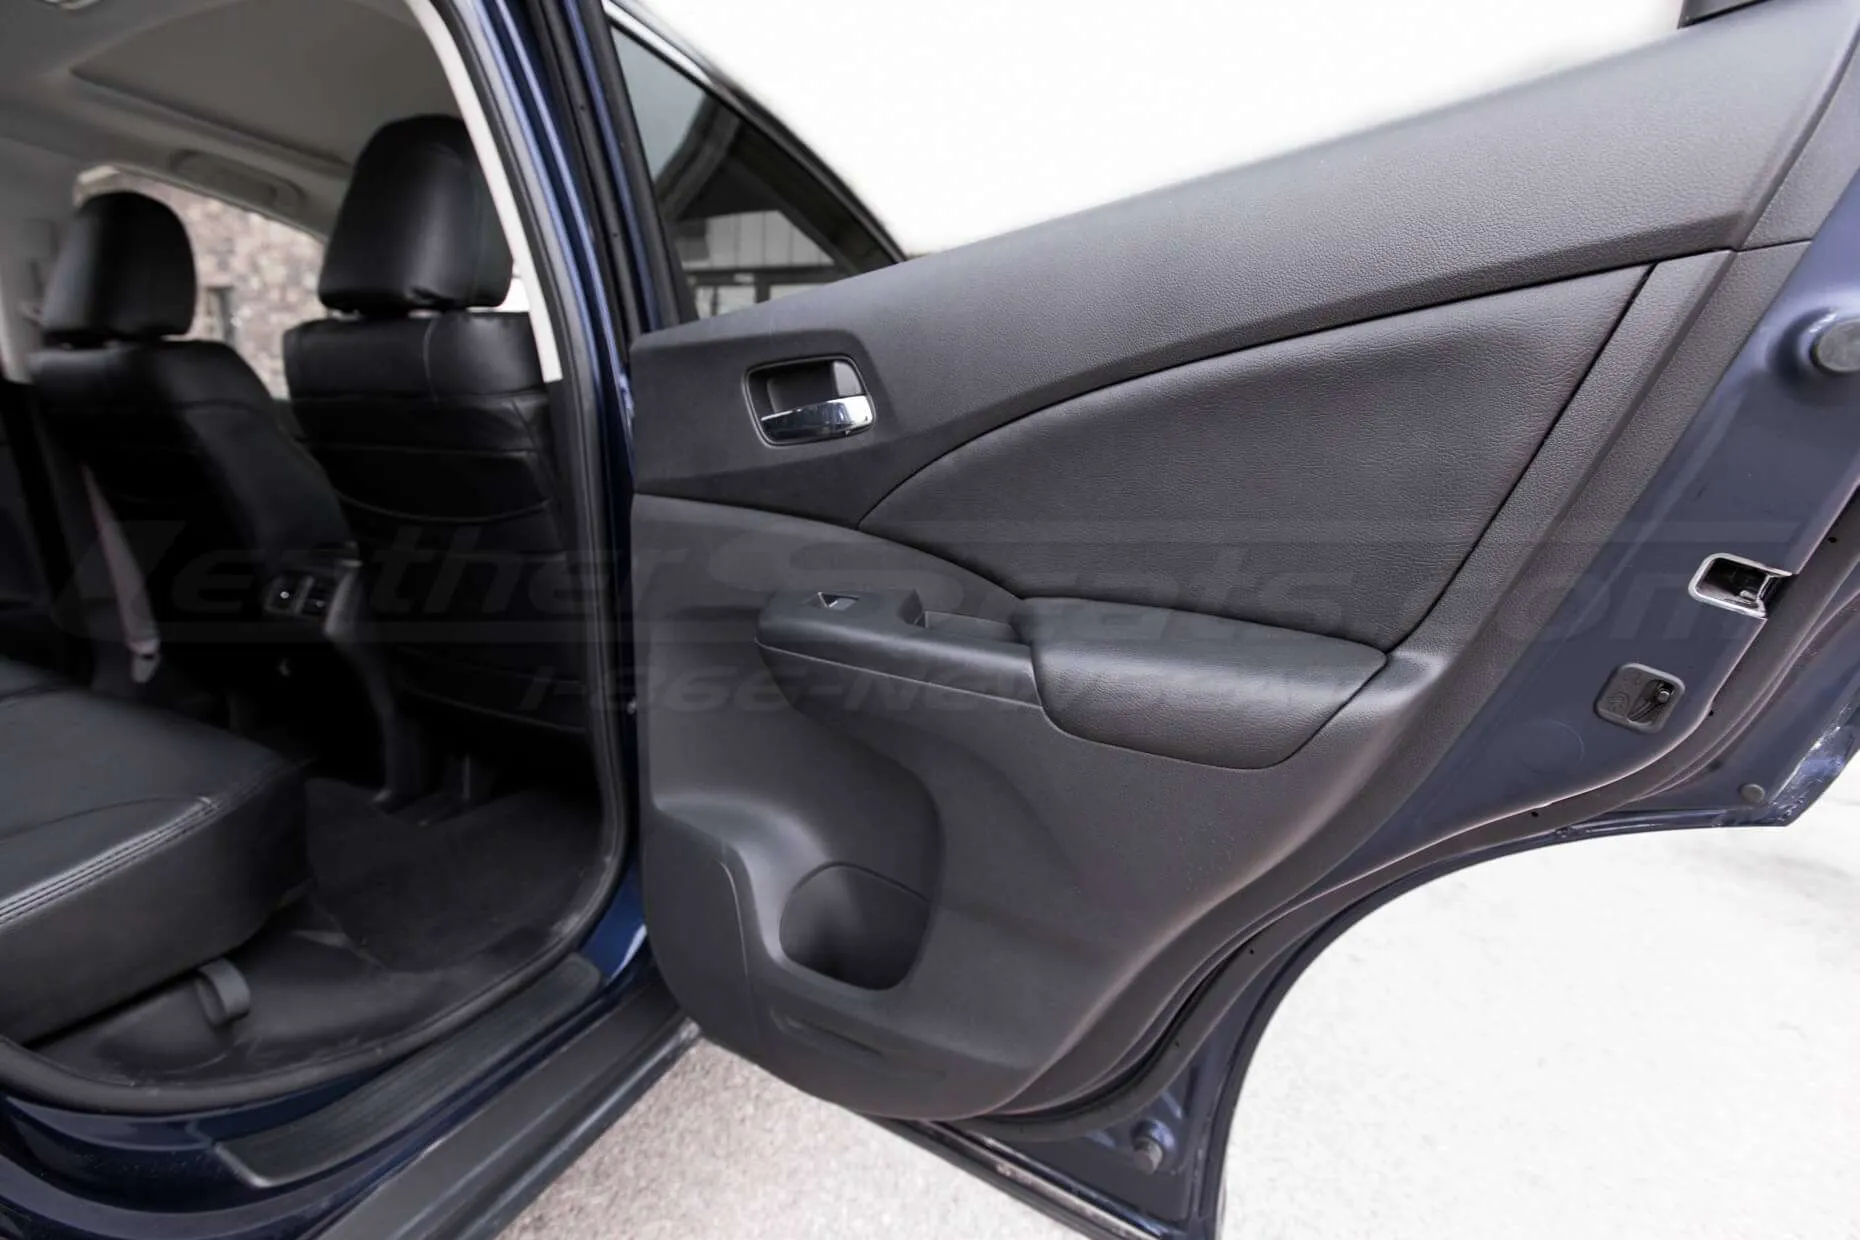 Honda CRV Leather Seat Kit - Black - Installed - Door panel insert and armrest